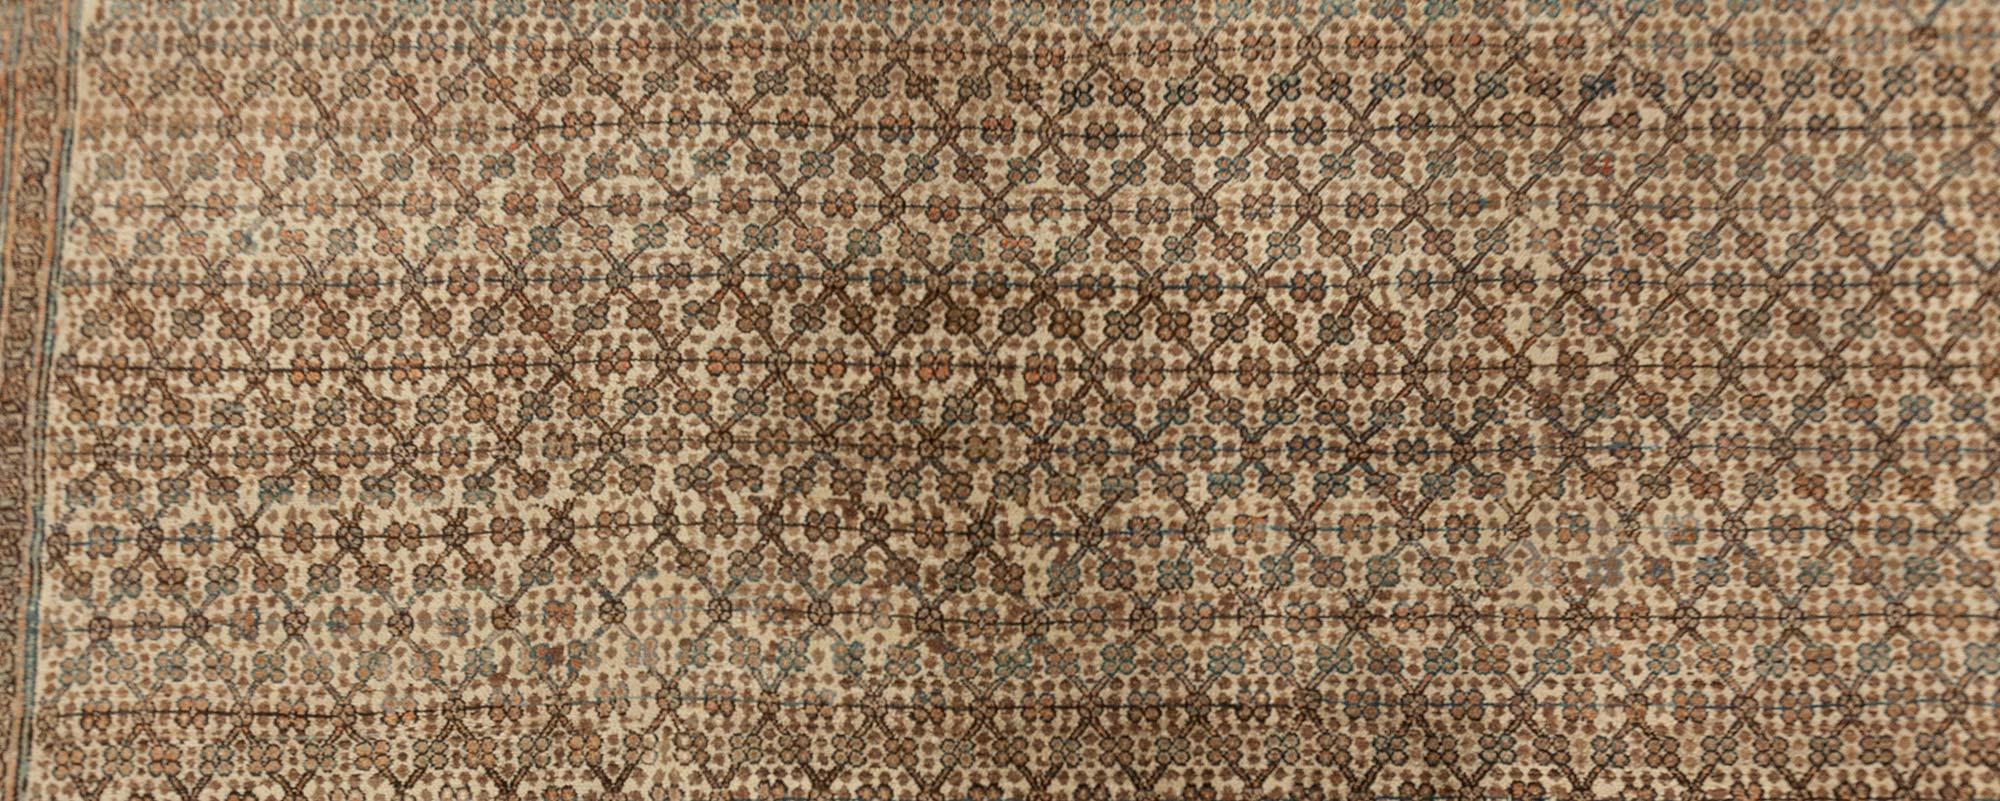 Early 20th Century Persian hamadan rug.
Size: 12'2